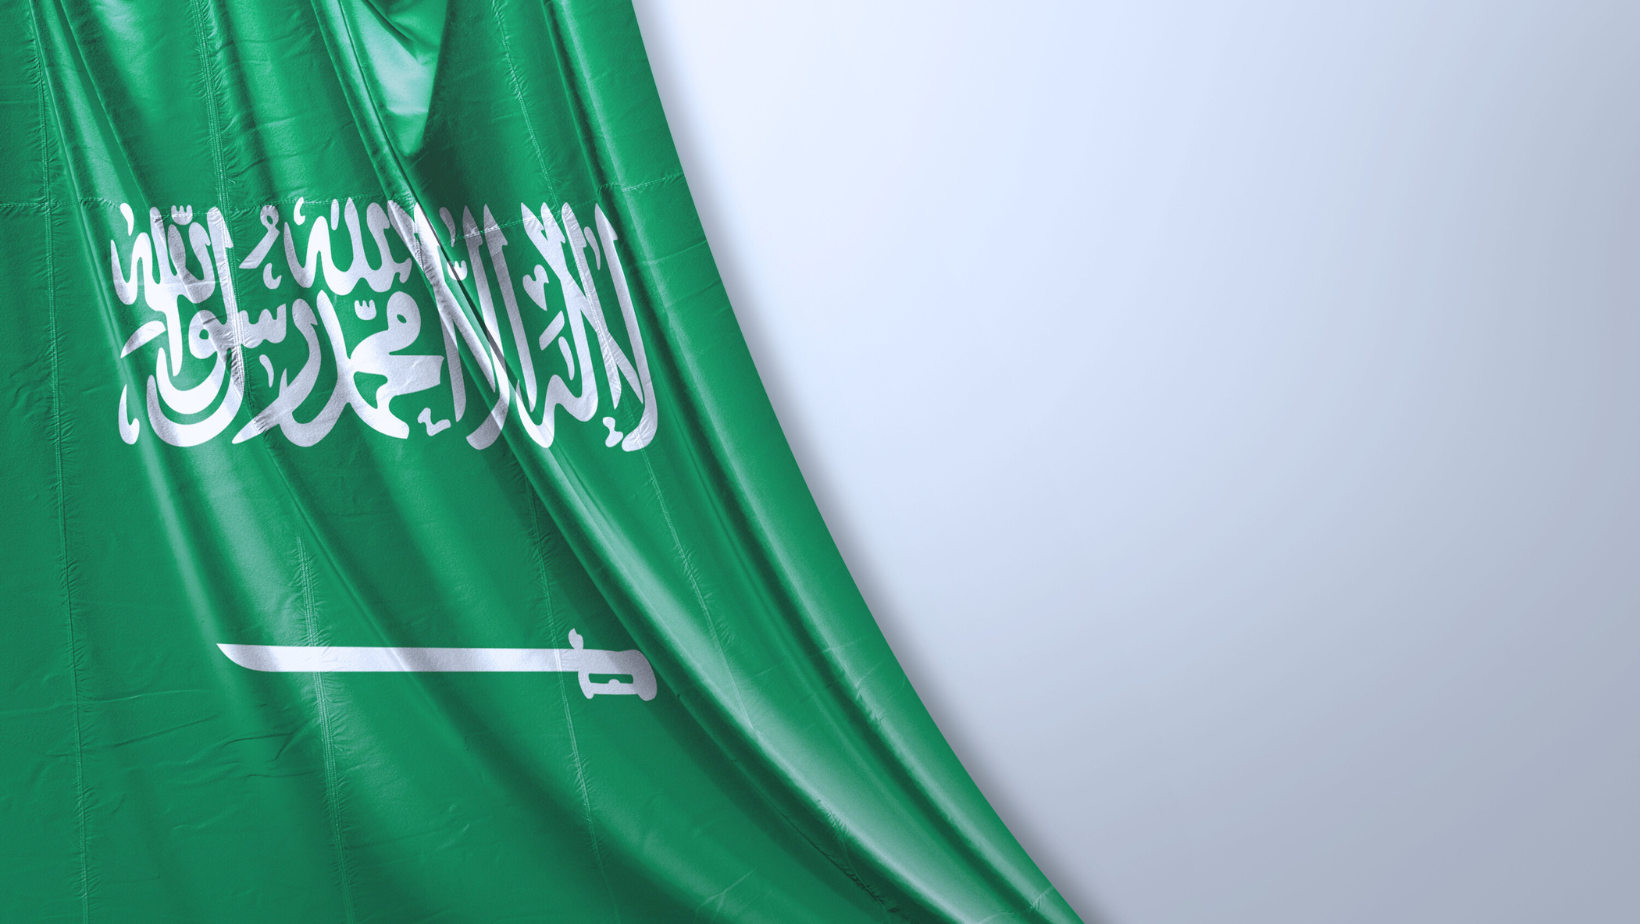 Islam's green flag